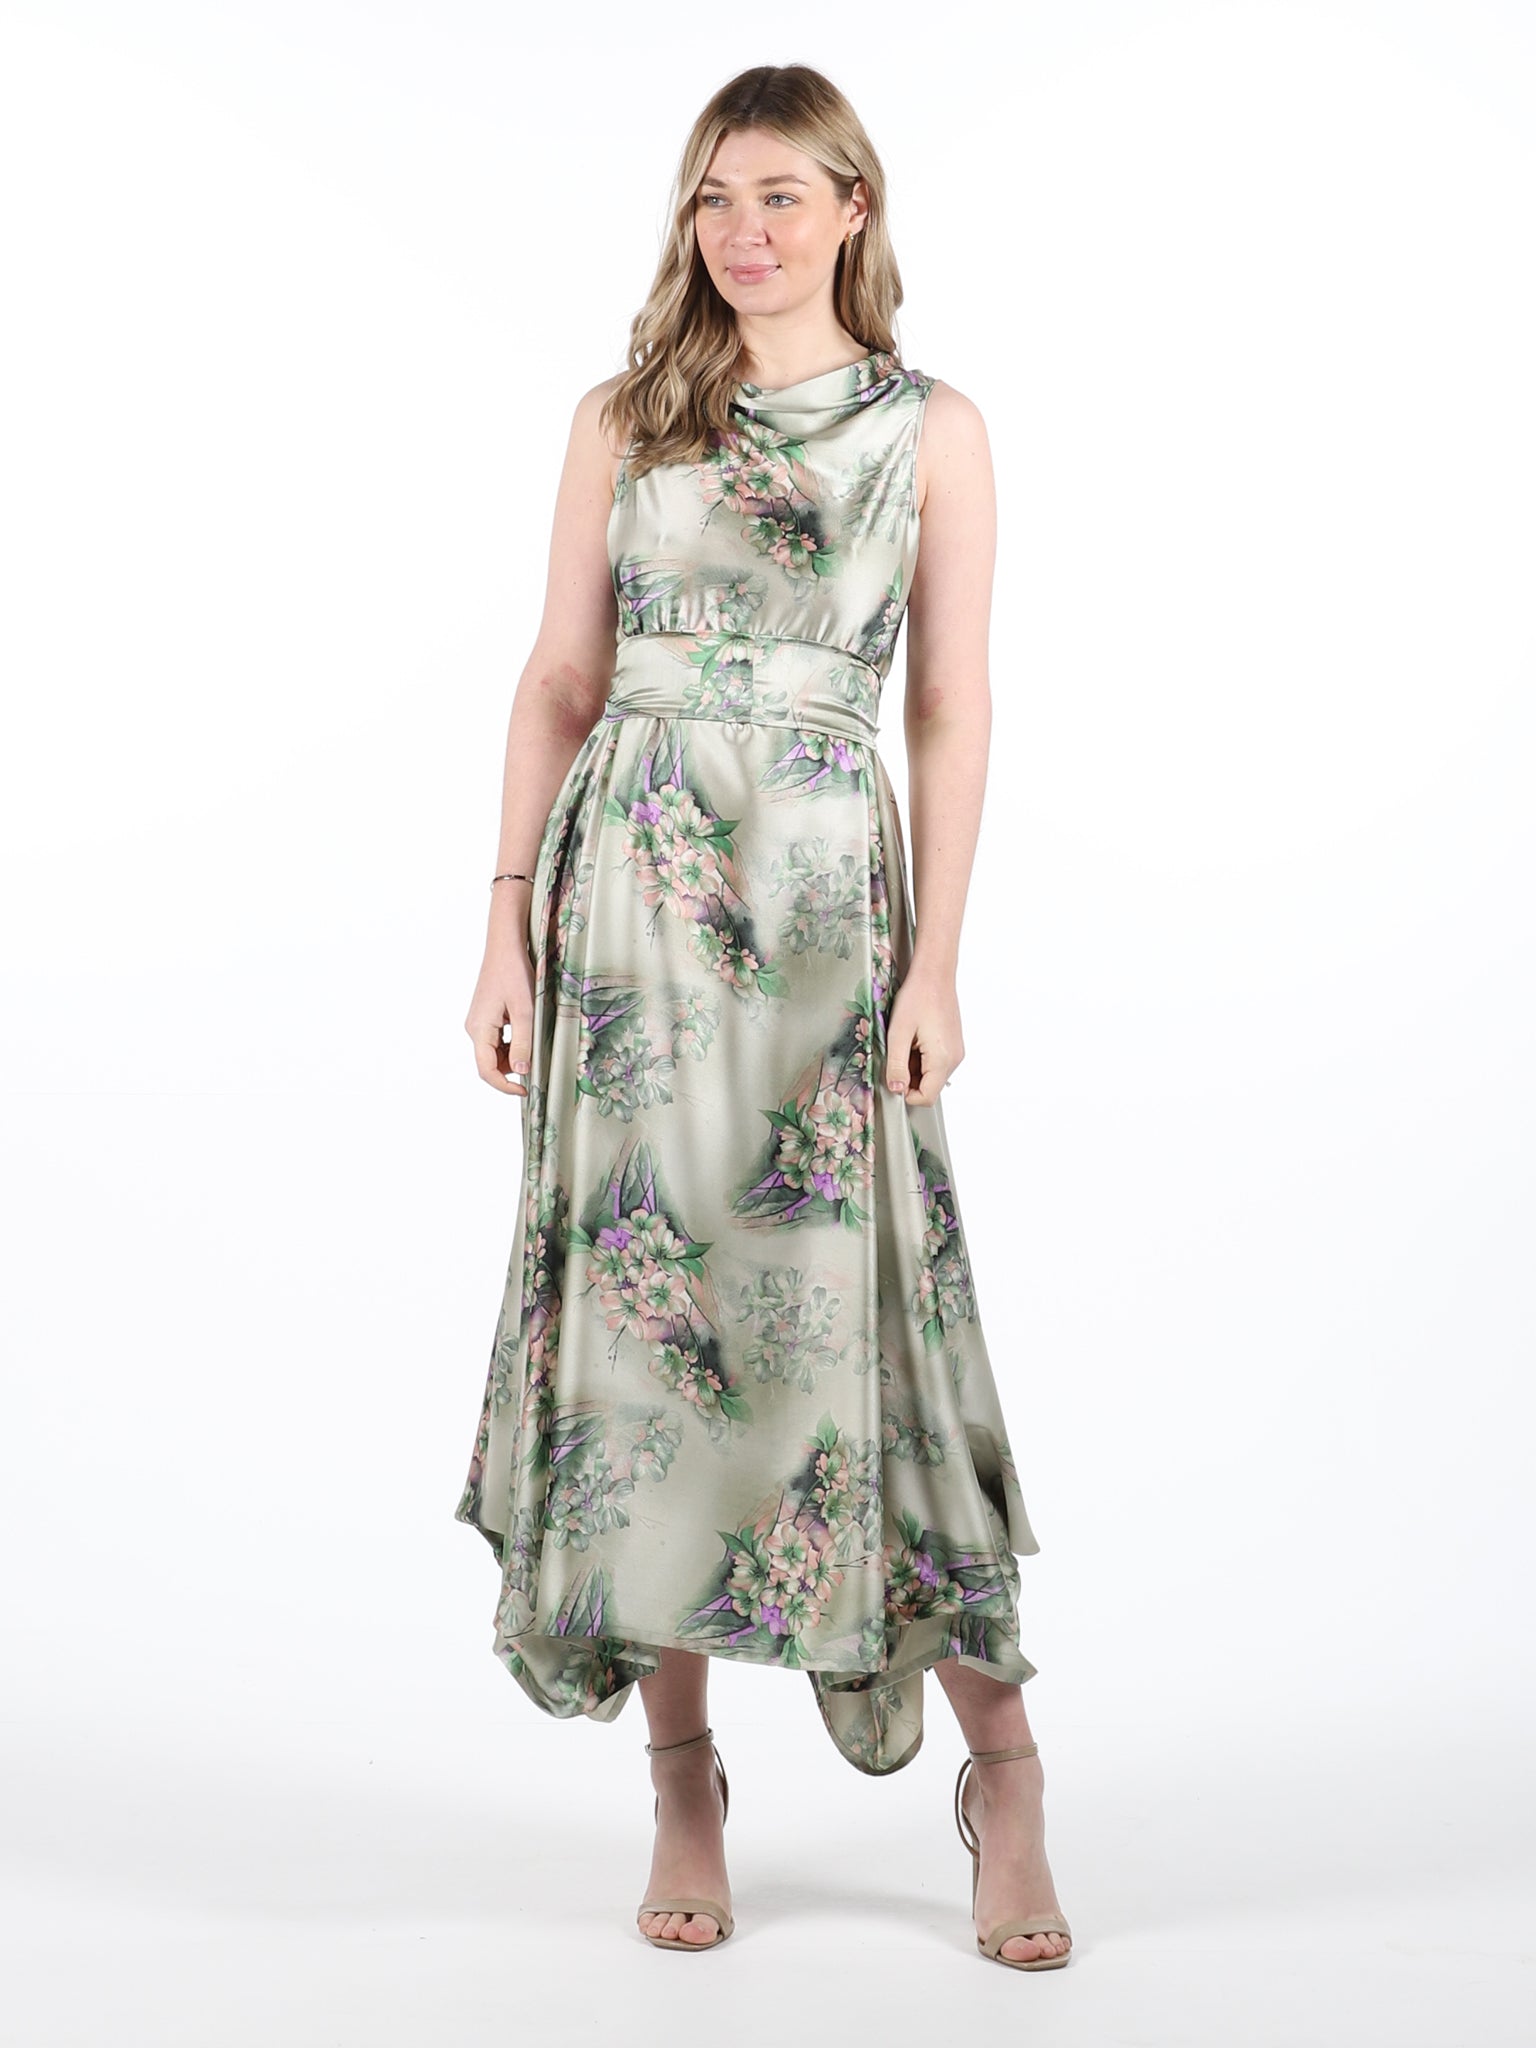 Sage Olivia Floral Darcy Dress (worn back to front)